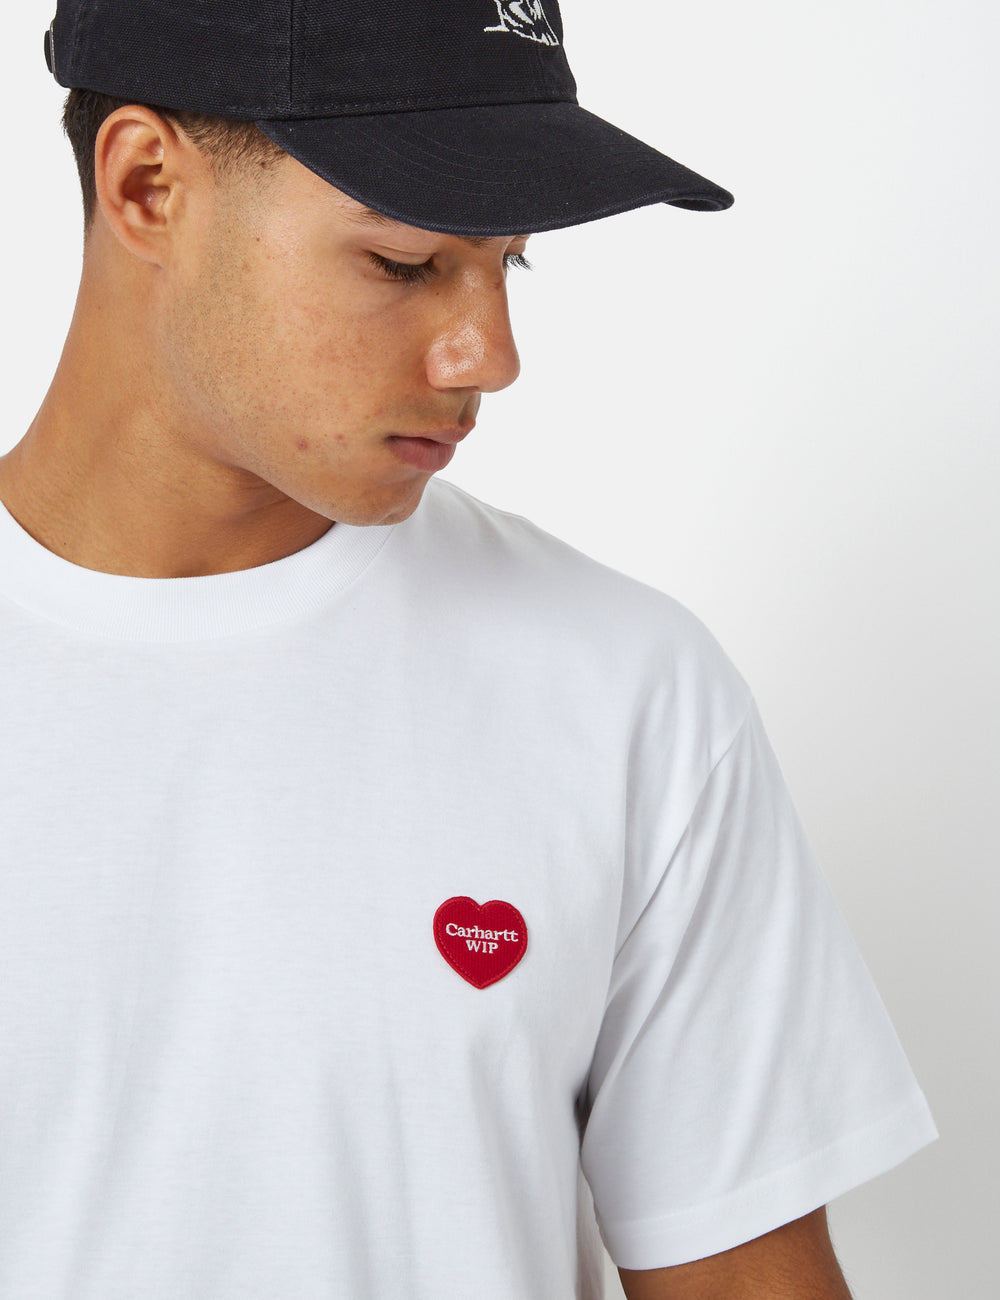 – I White Carhartt-WIP T-Shirt URBAN (Organic) Heart Excess. EXCESS - Double Urban